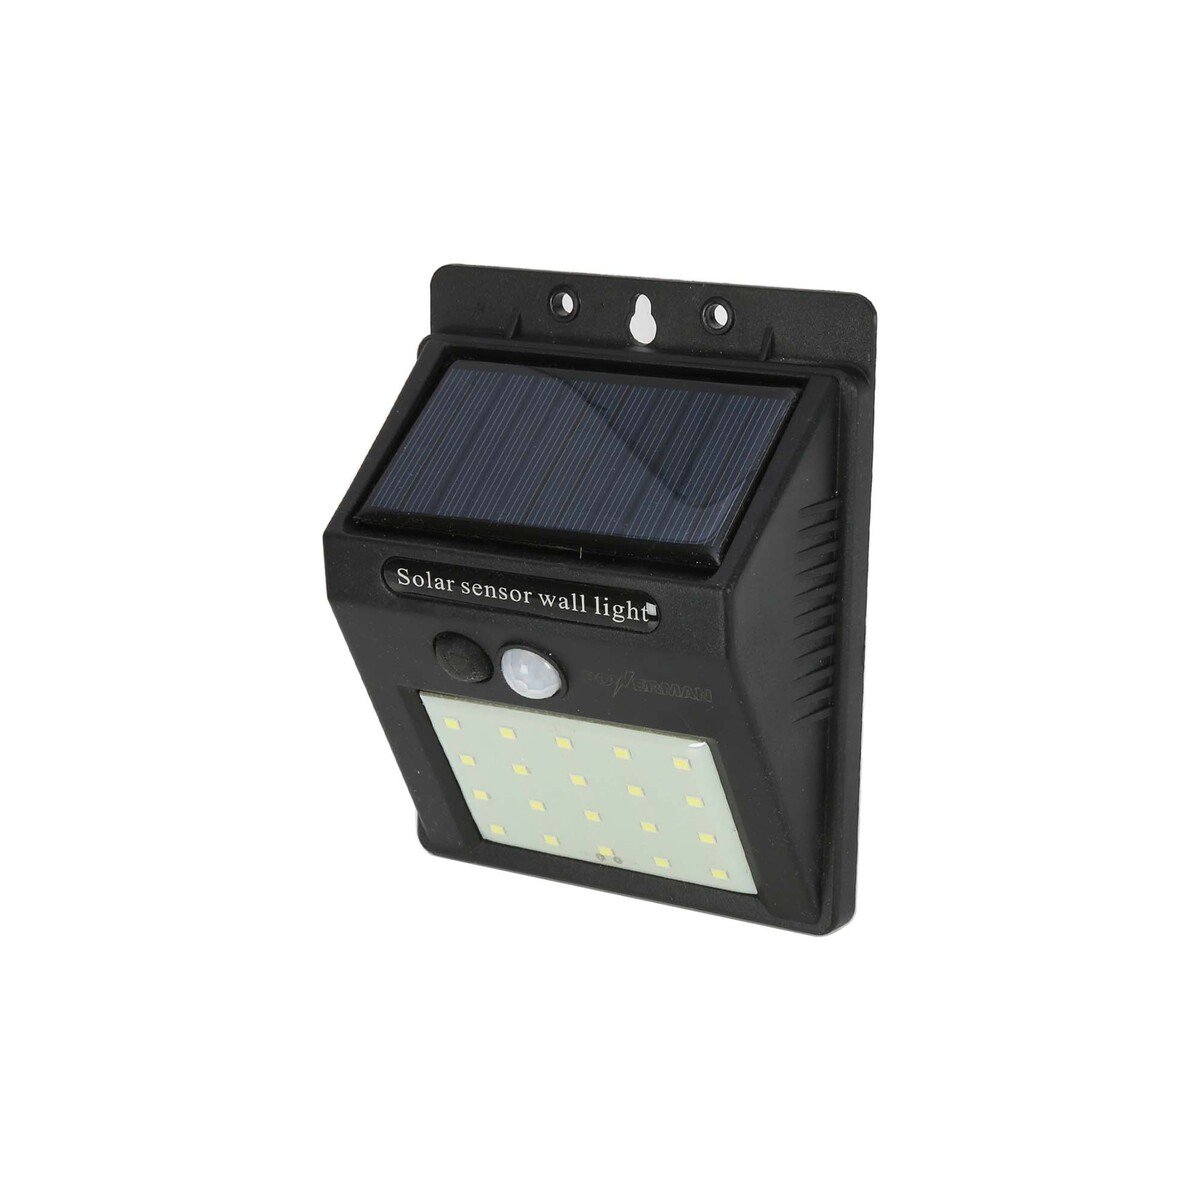 Powerman Solar Motion Sensor LED Wall Light KSW-801B